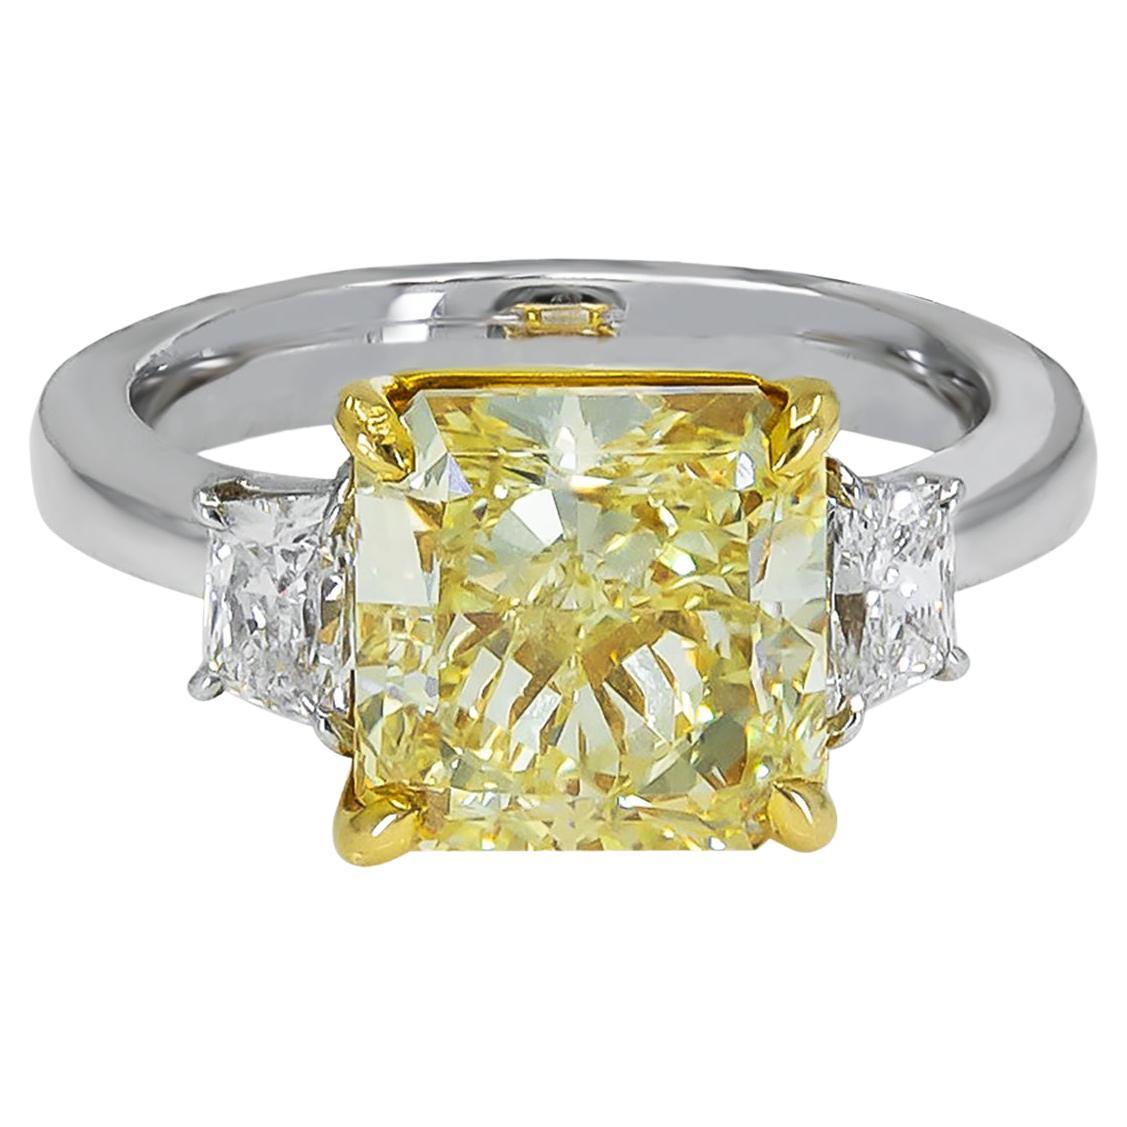 Spectra Fine Jewelry GIA Certified 5.05 Carat Fancy Intense Yellow Diamond Ring